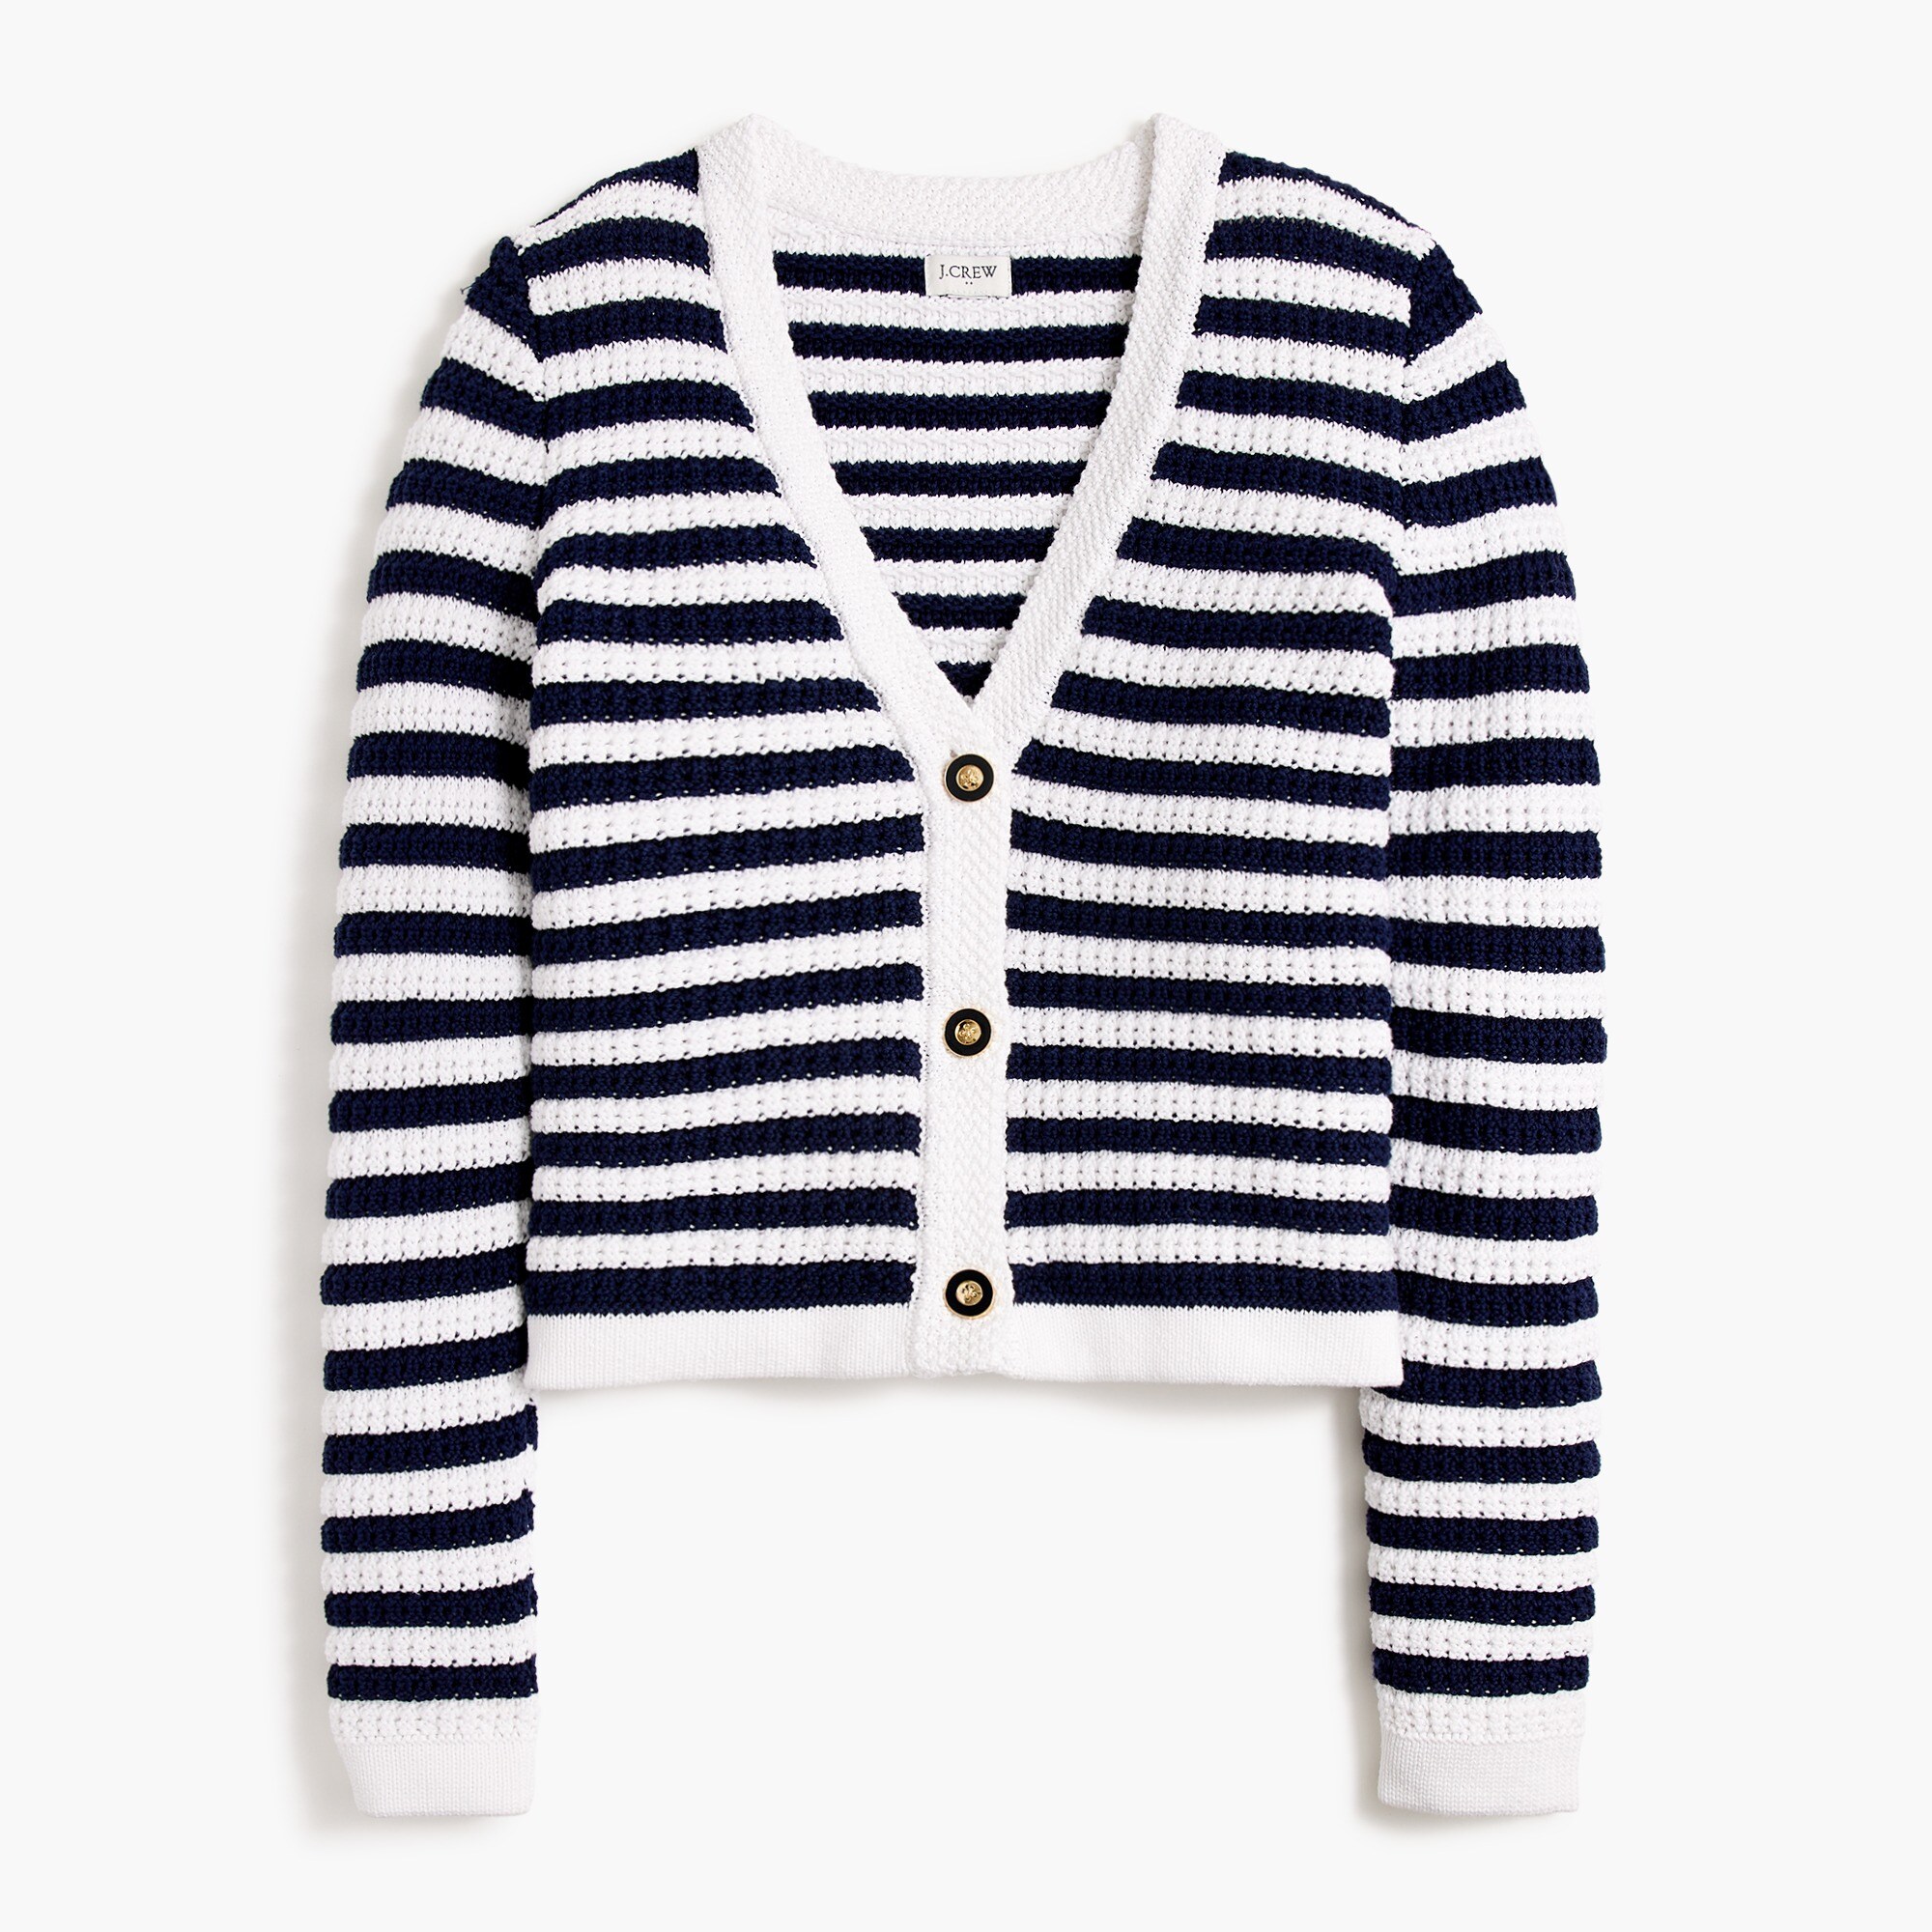 womens Striped knit V-neck cardigan sweater